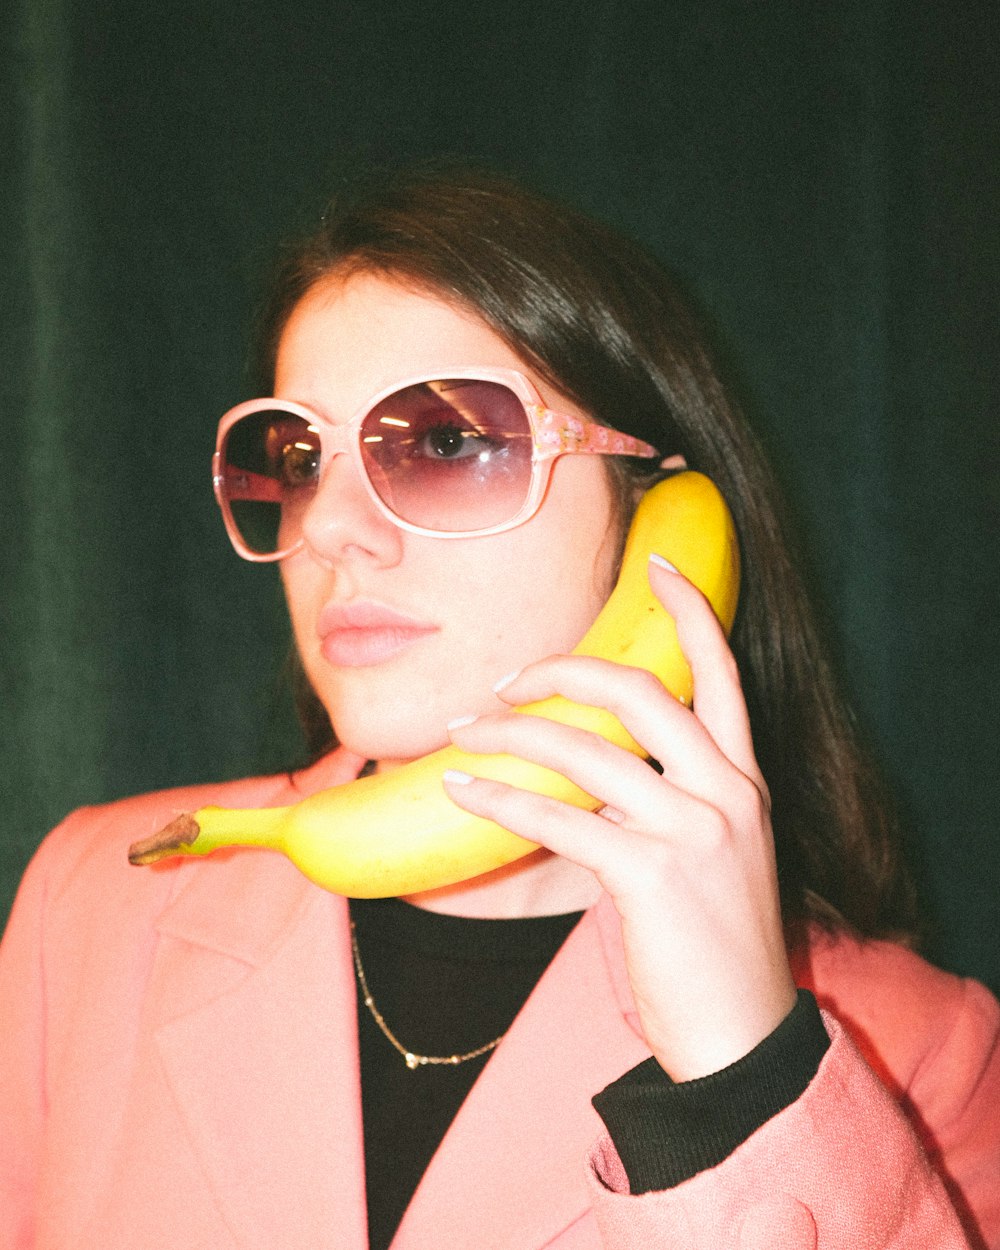 Femme en blazer rose tenant une banane jaune